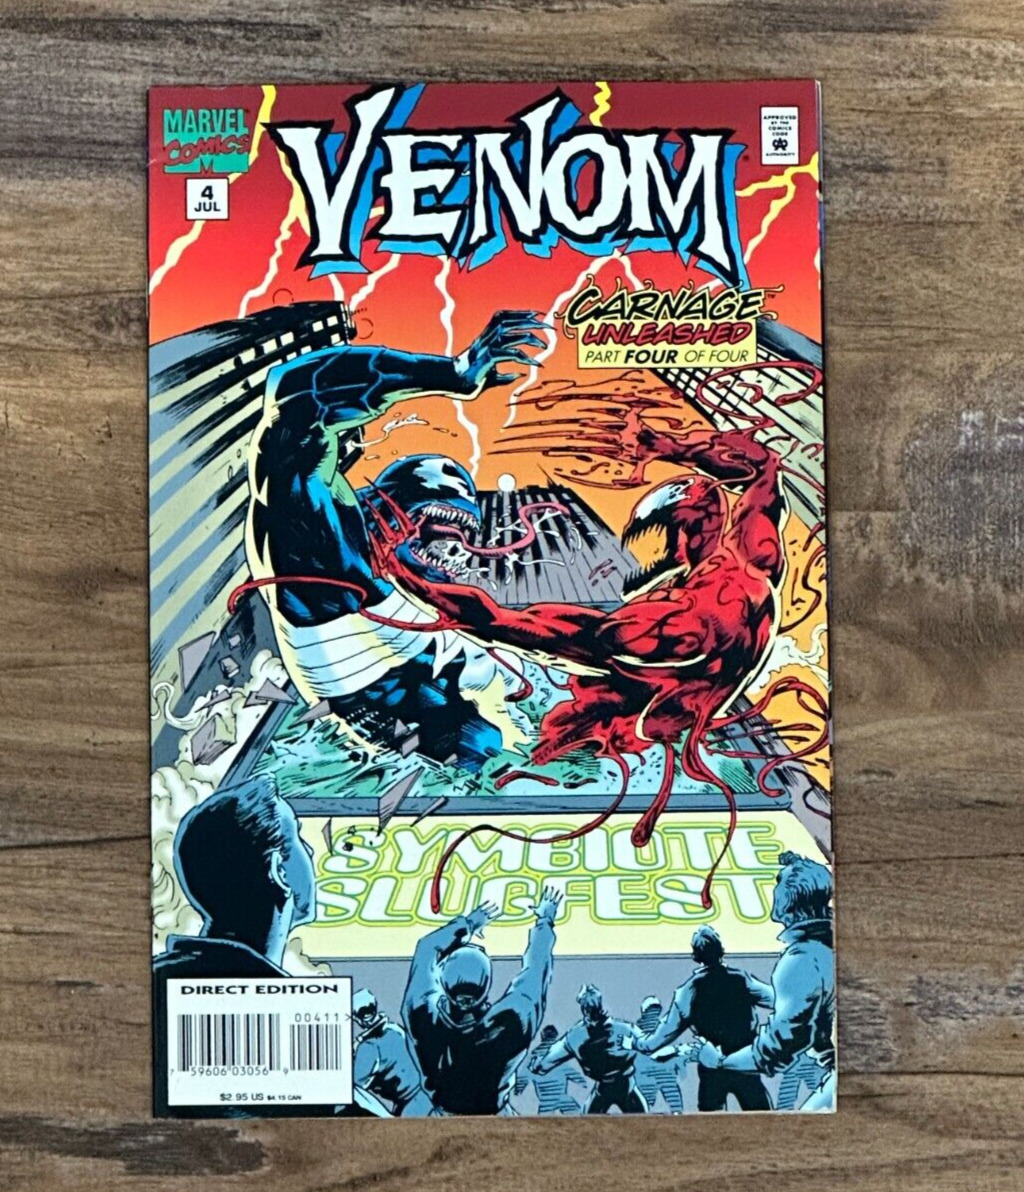 Venom #4 Carnage Unleashed (1995 Marvel Comics)